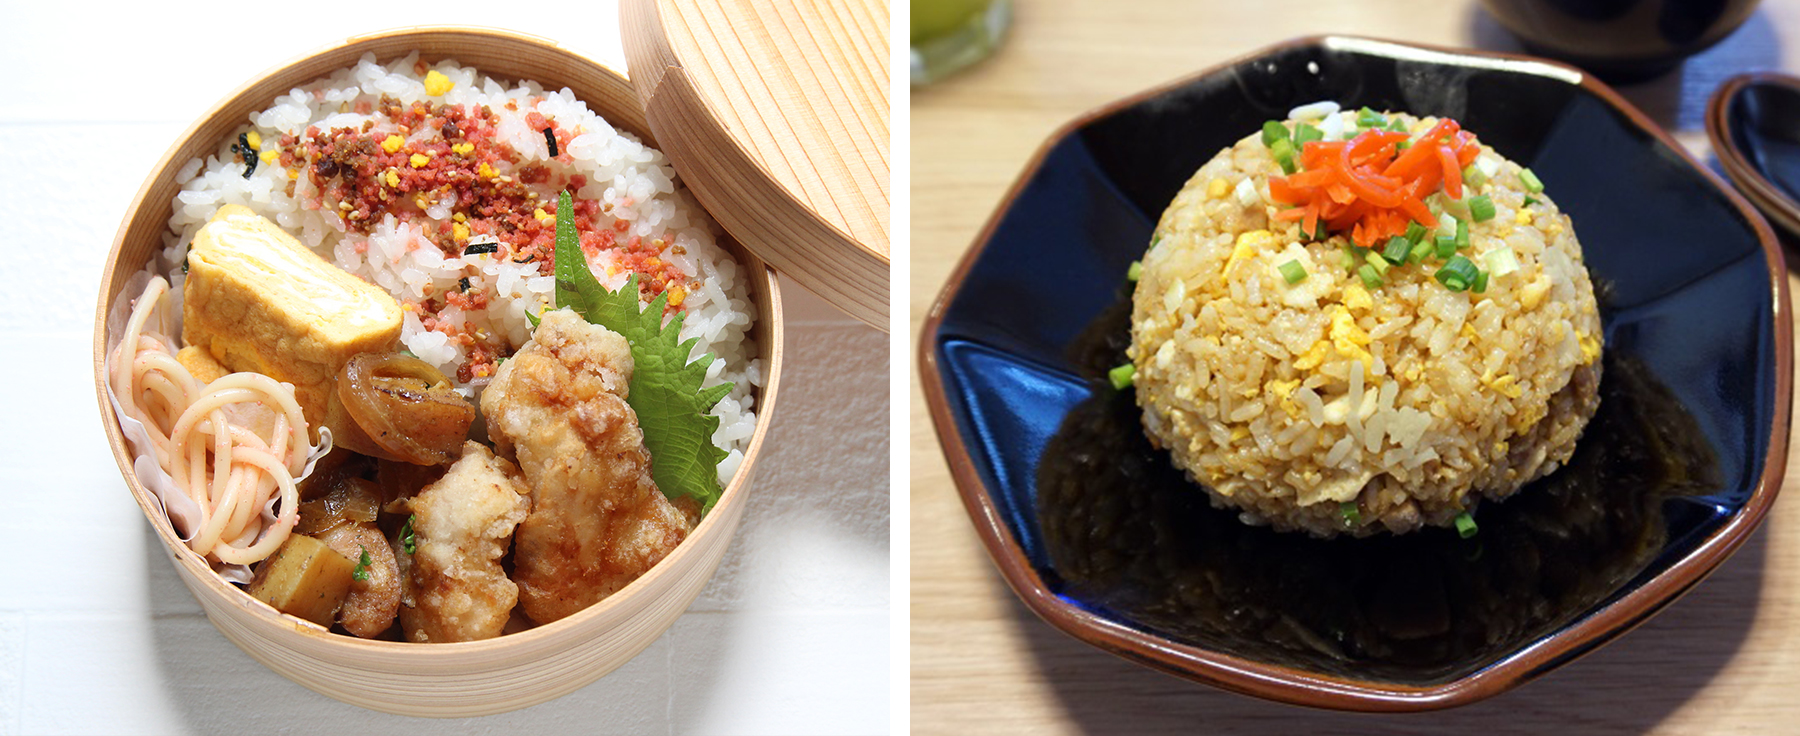 furikake in bento and fried rice